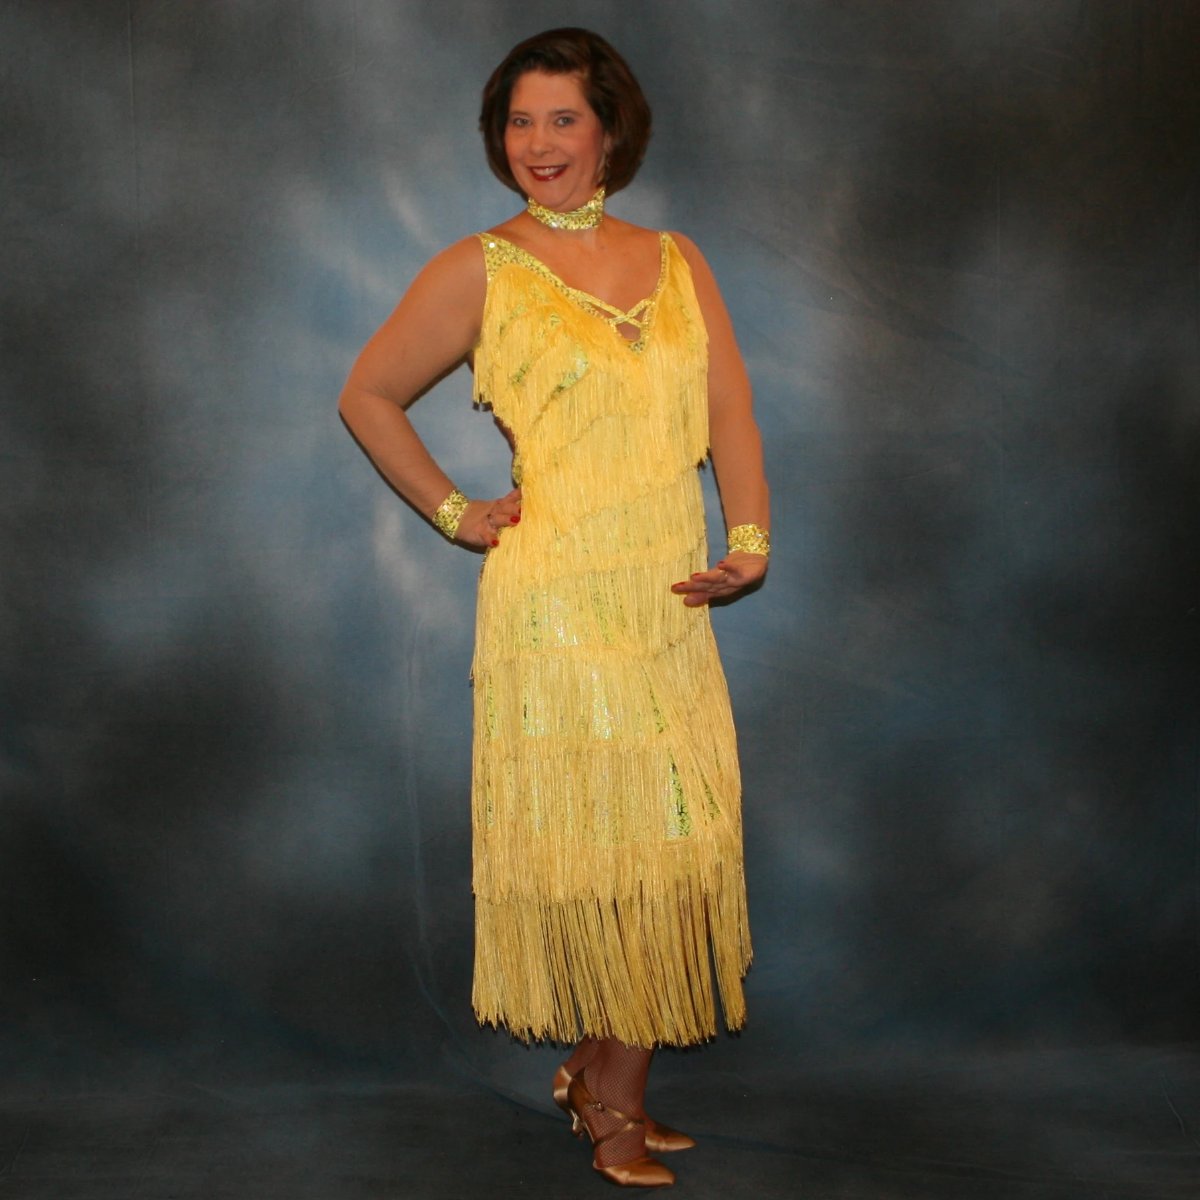 Crystal's Creations Yellow Latin/rhythm fringe dress created in yellow splash metallic lycra with yards of chainette fringe, sheer nude illusion sleeves, embellished with jonquil Swarovski rhinestones.   